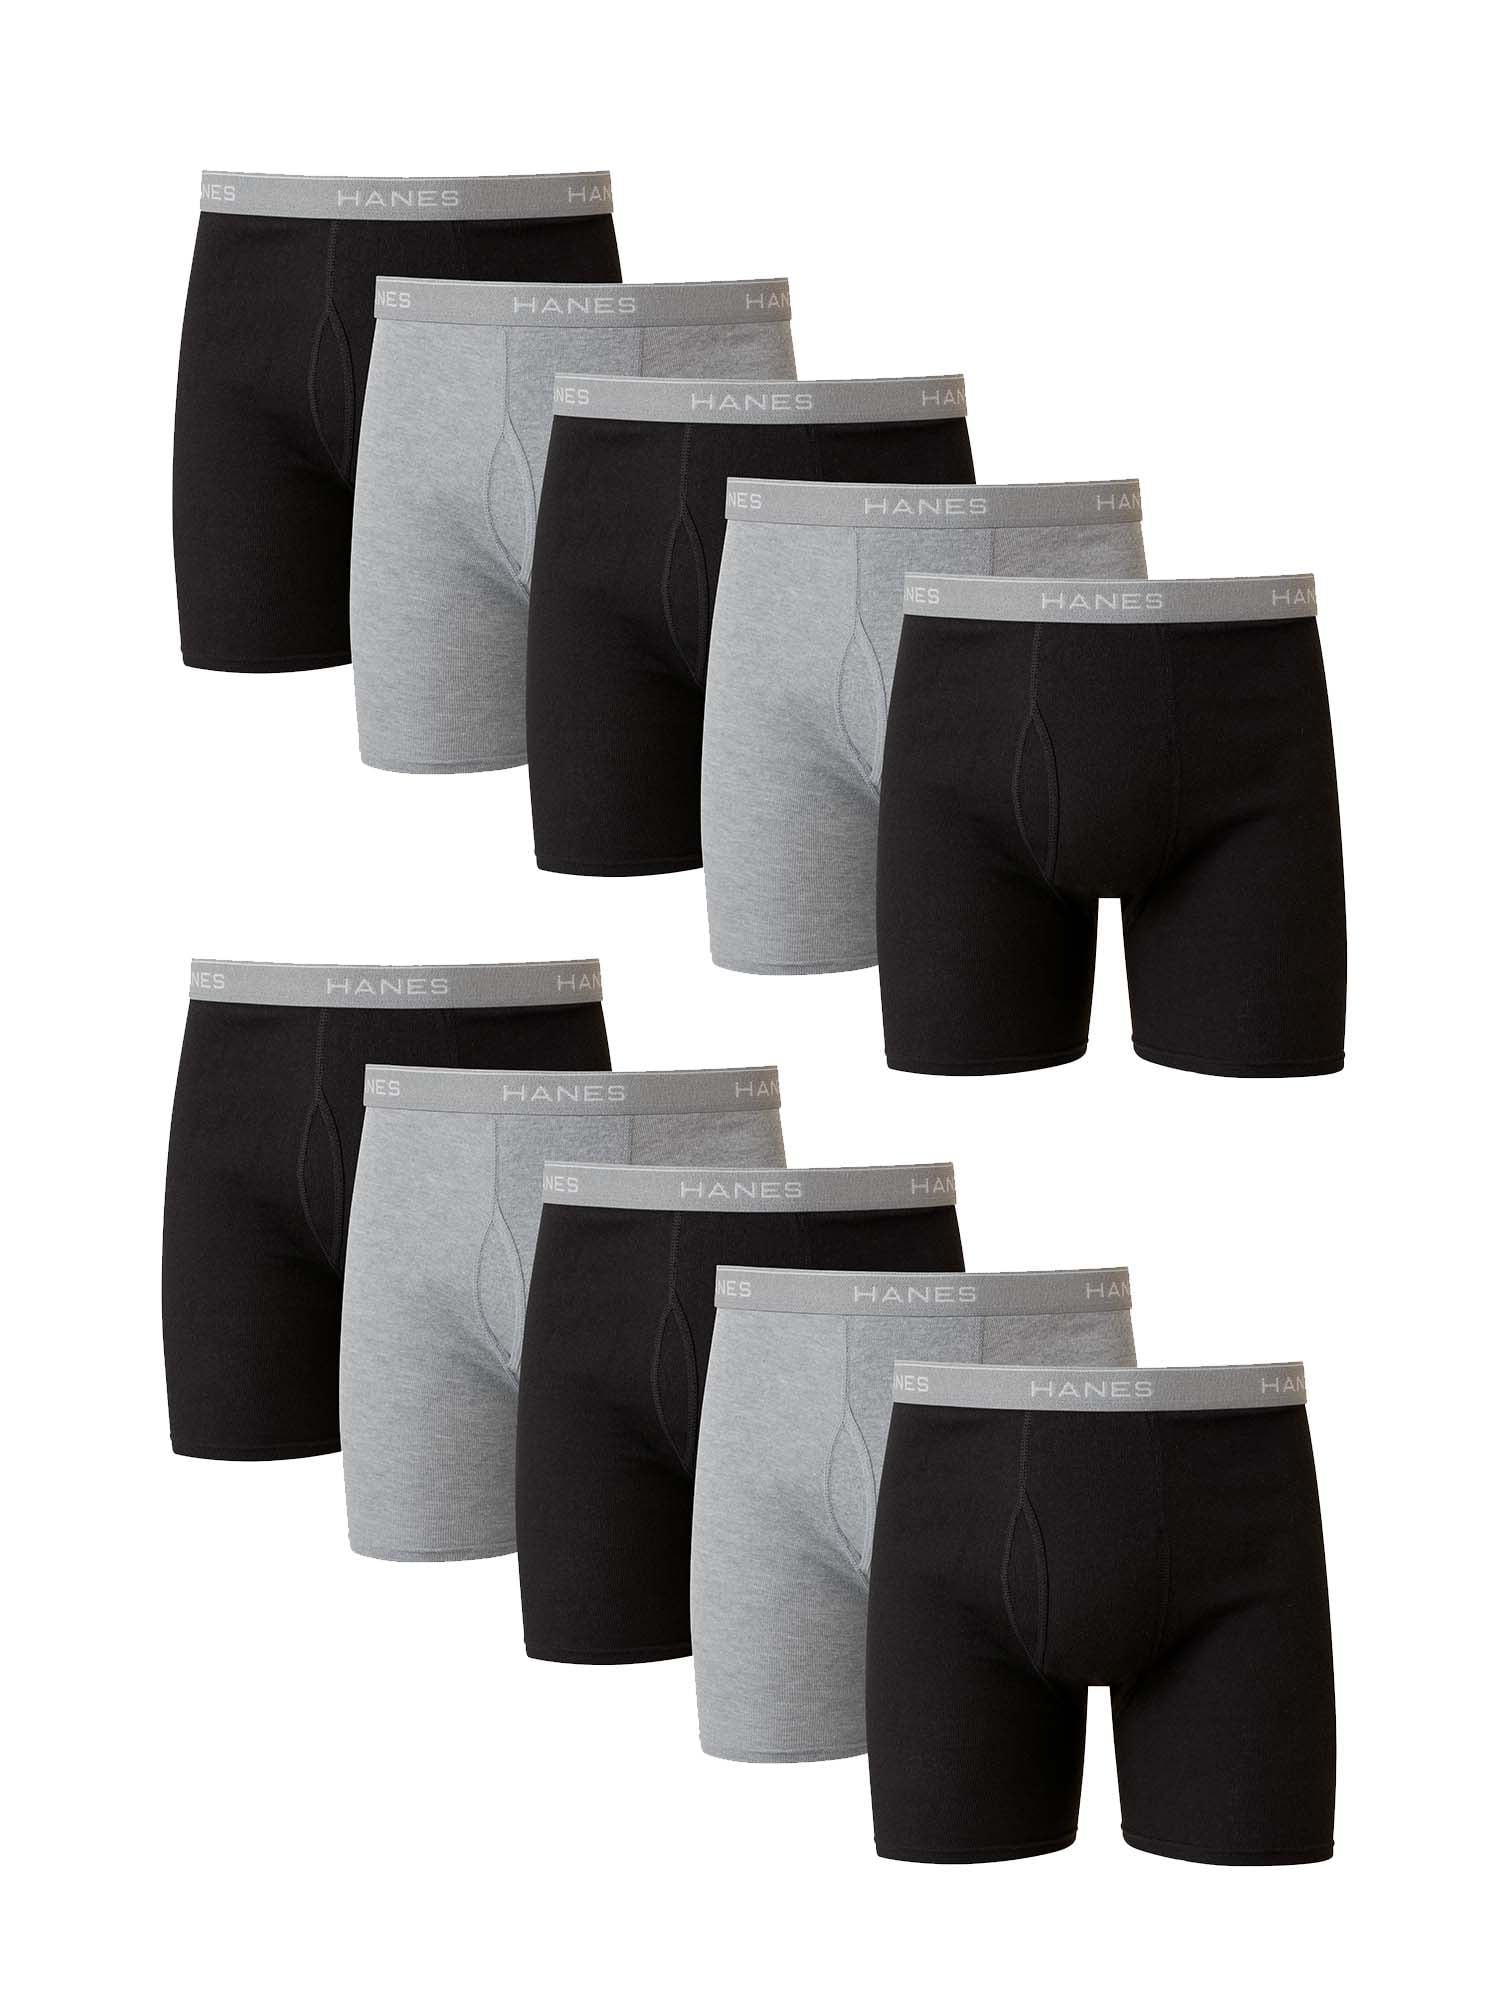 Hanes Men's Super Value Pack Black/Grey Boxer Briefs, 10 Pack - Walmart.com